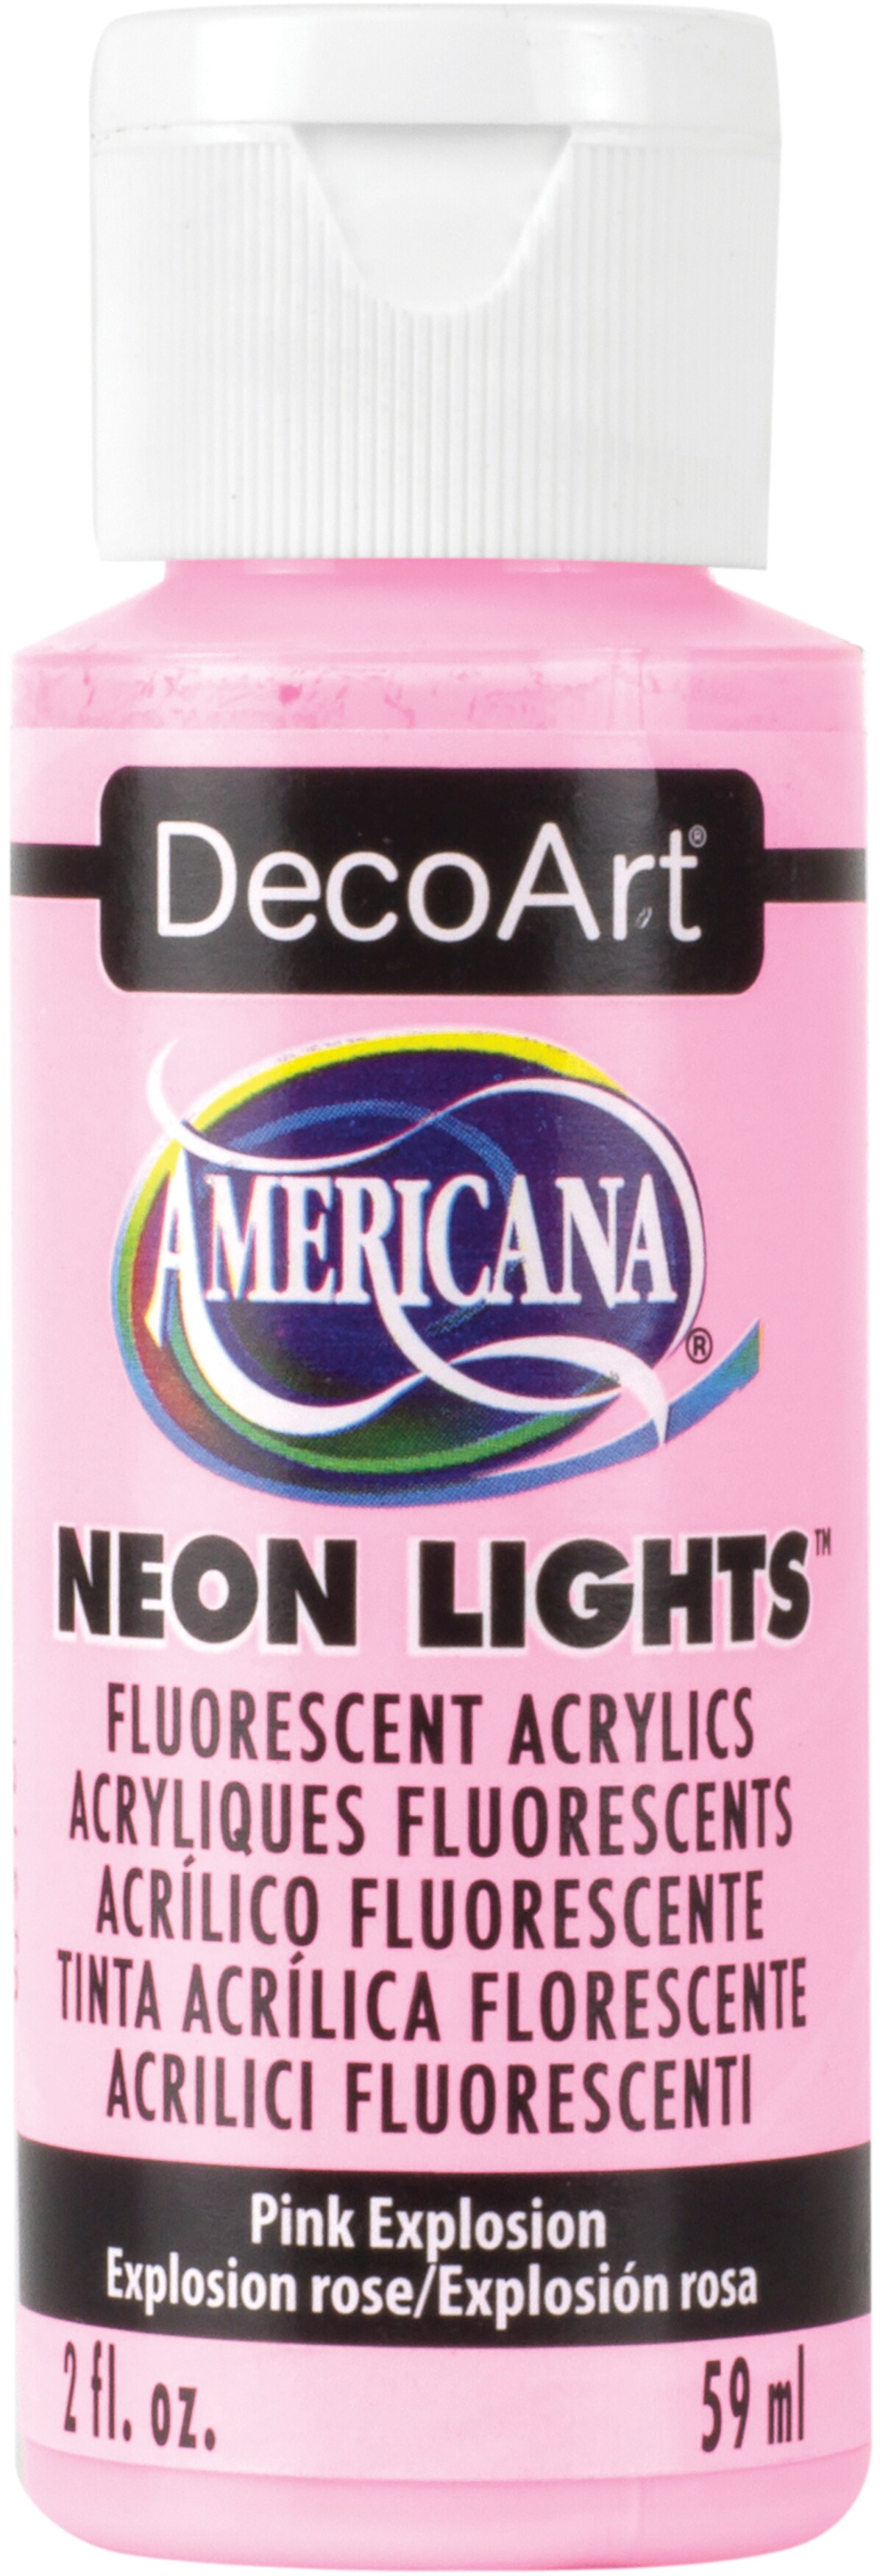 DecoArt Americana Neon Lights Fluorescent Acrylic Paint 2oz-Pink Explosion